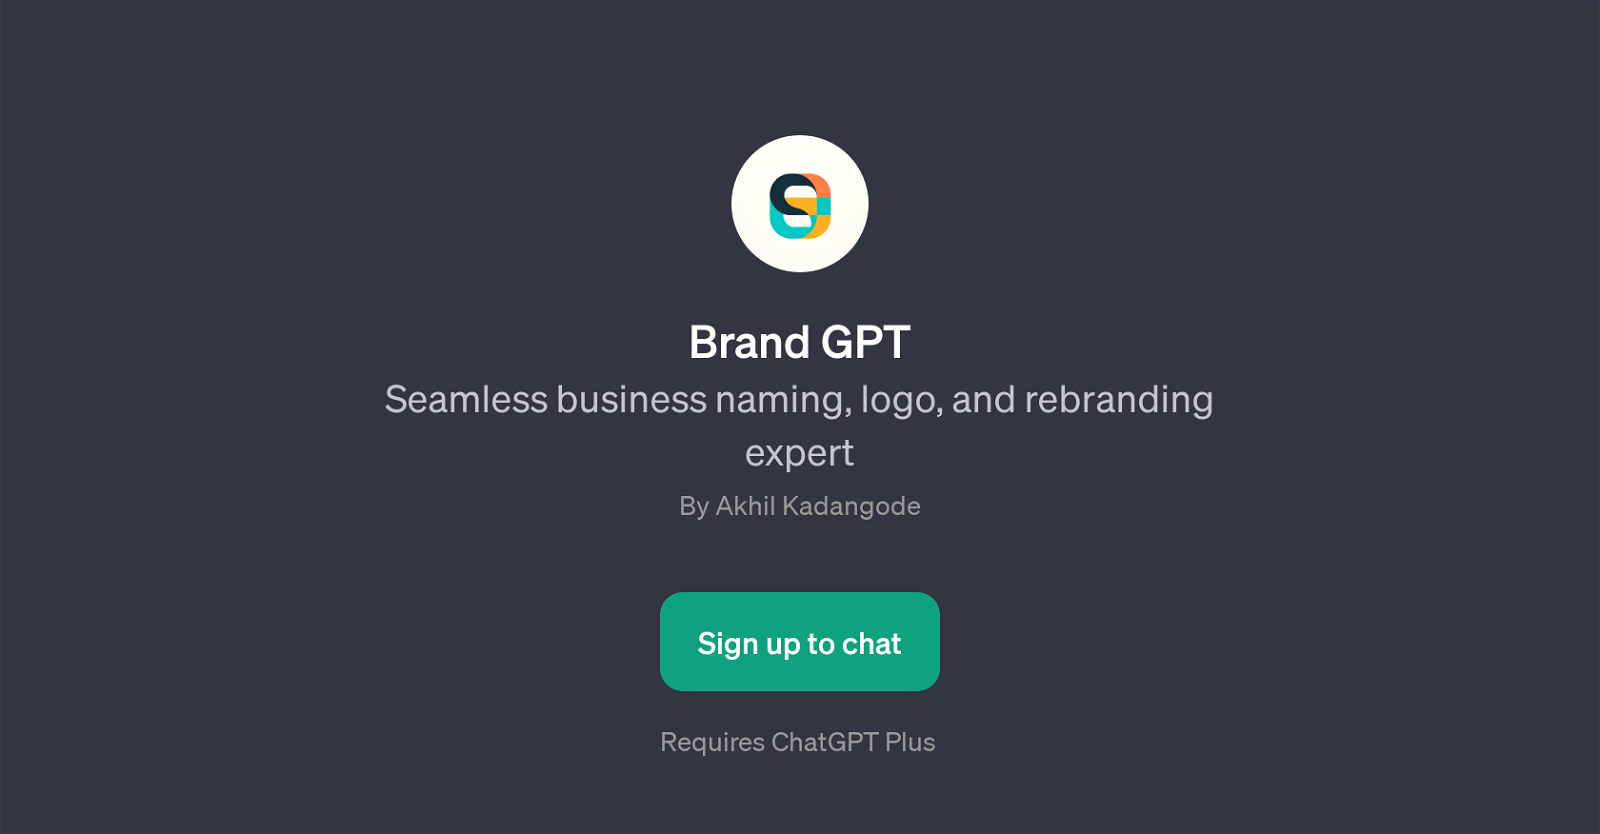 Brand GPT website